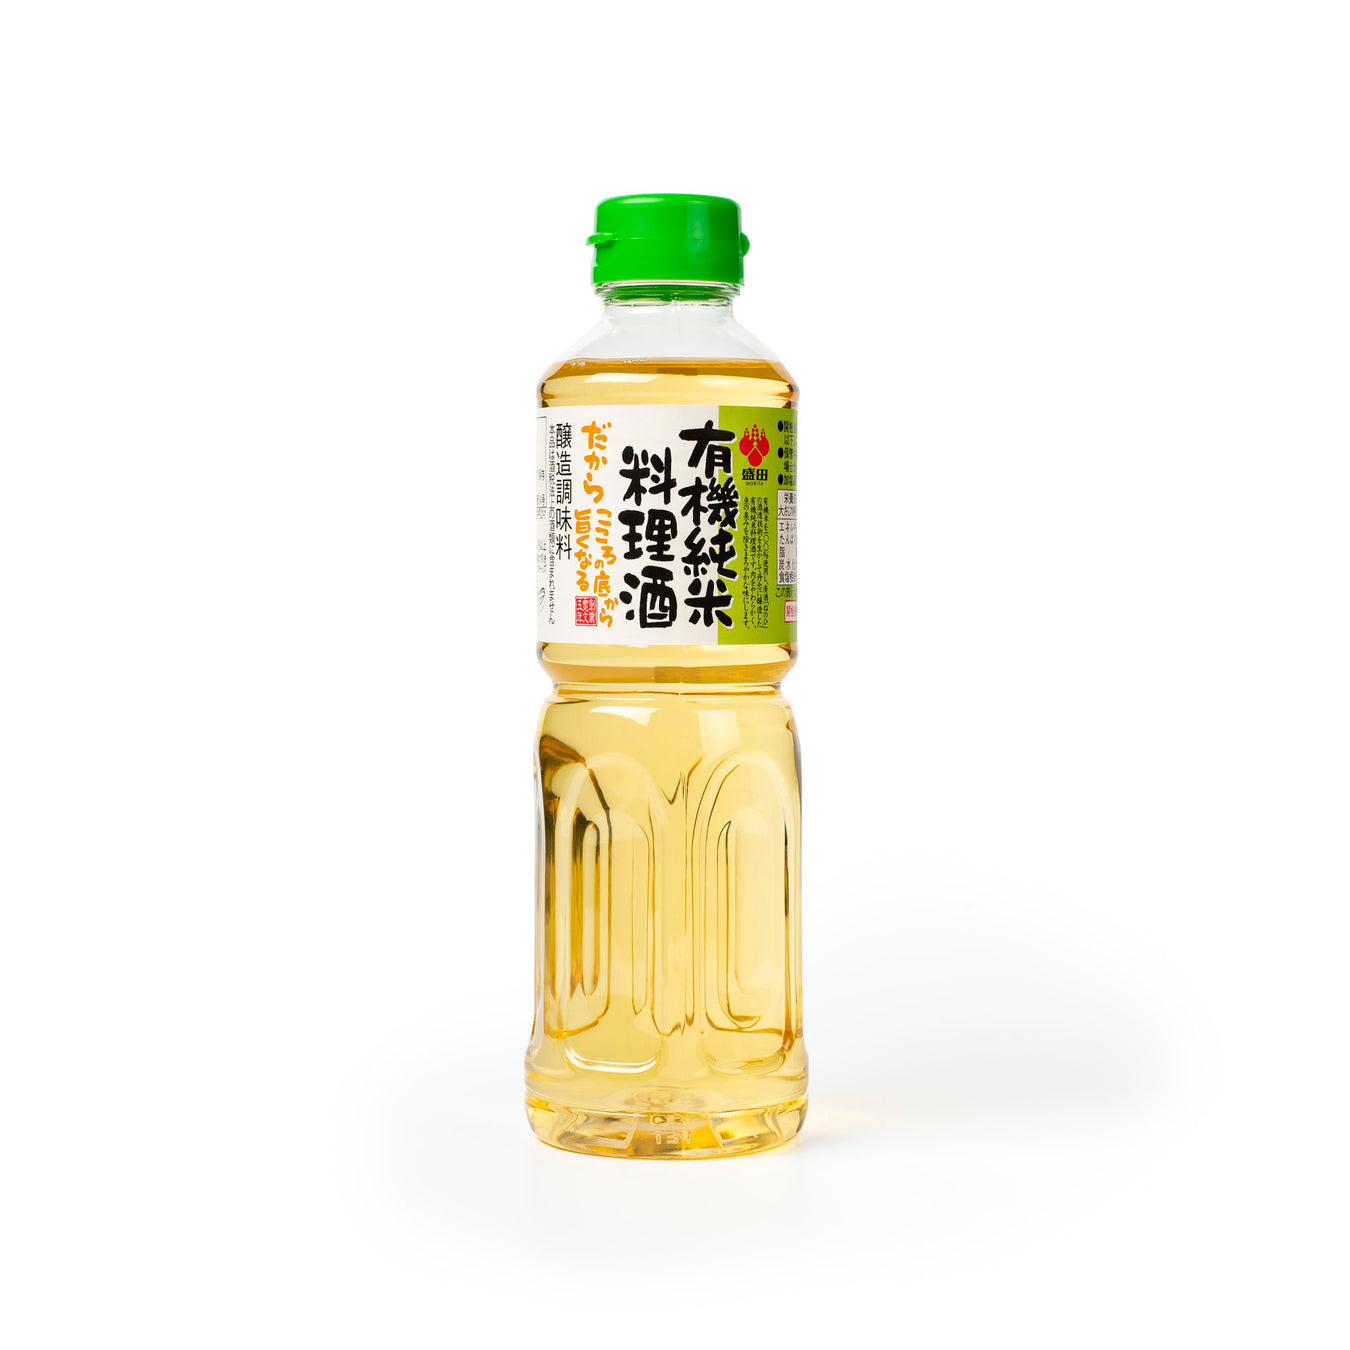 Vinegar / Oil / Mirin